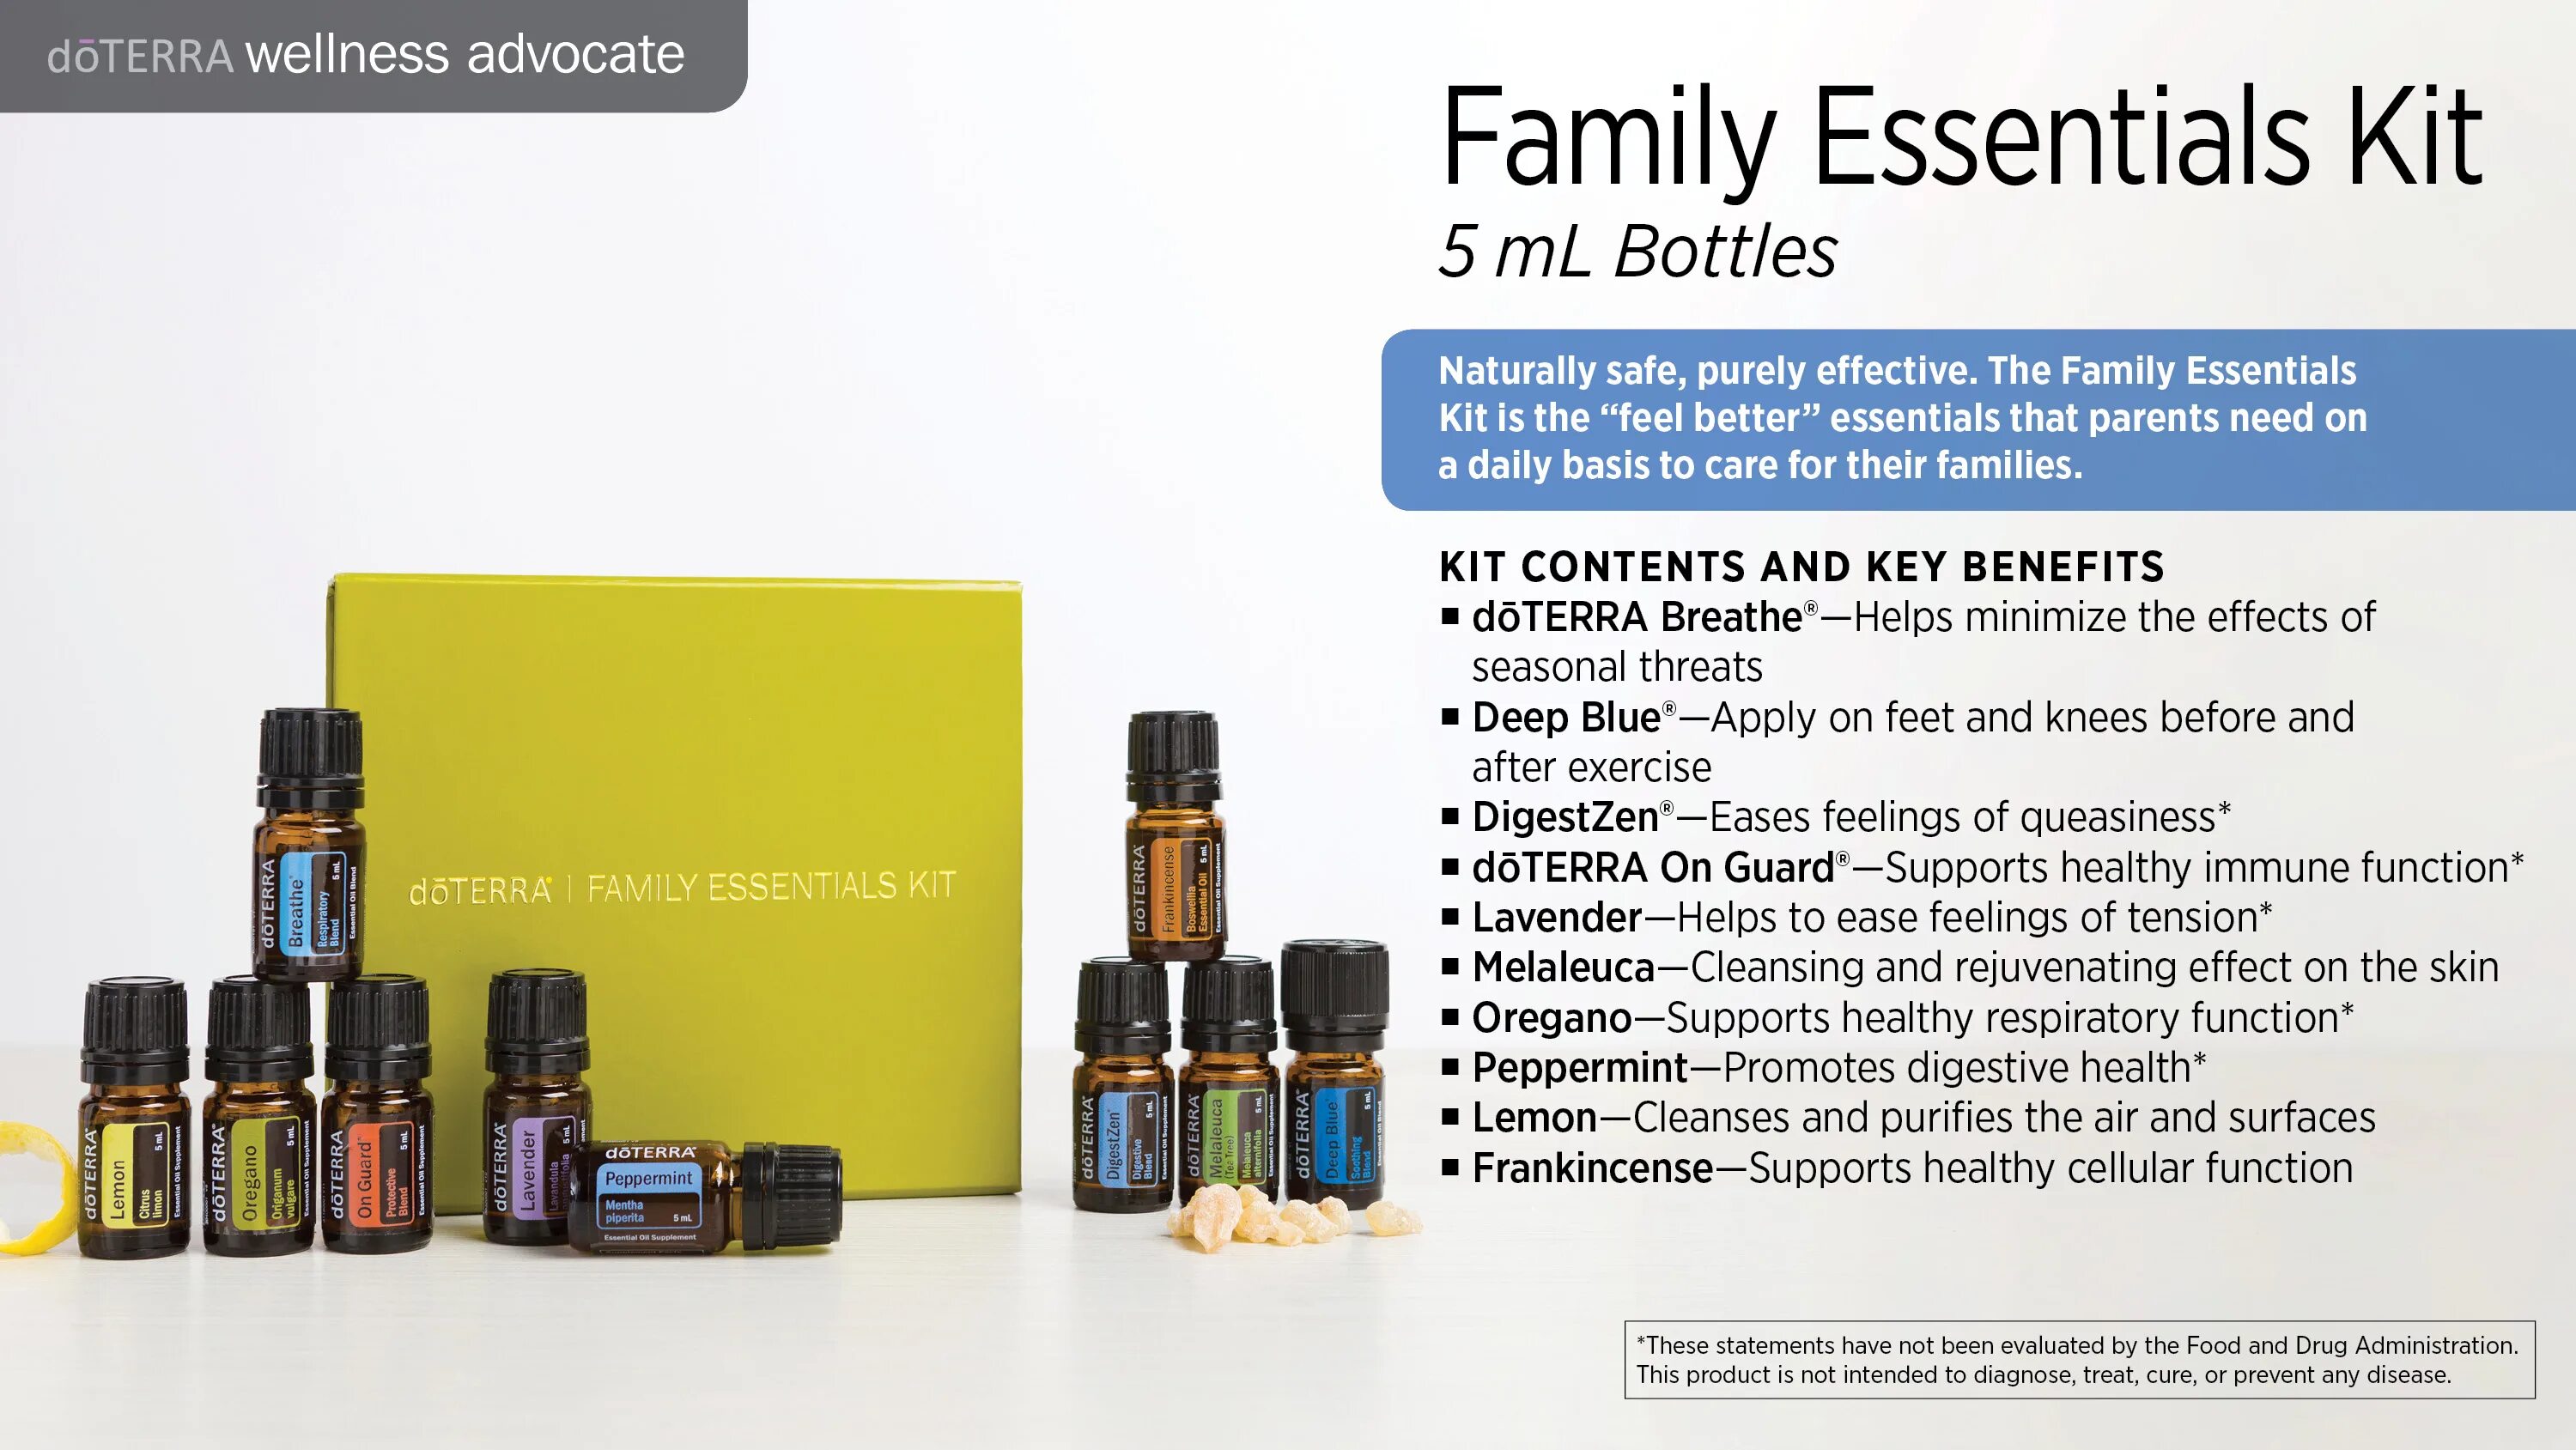 DOTERRA Family Essential Kit. ДОТЕРРА Family Kit аптечка. ДОТЕРРА Фэмили кит. Семейный доктор ДОТЕРРА.